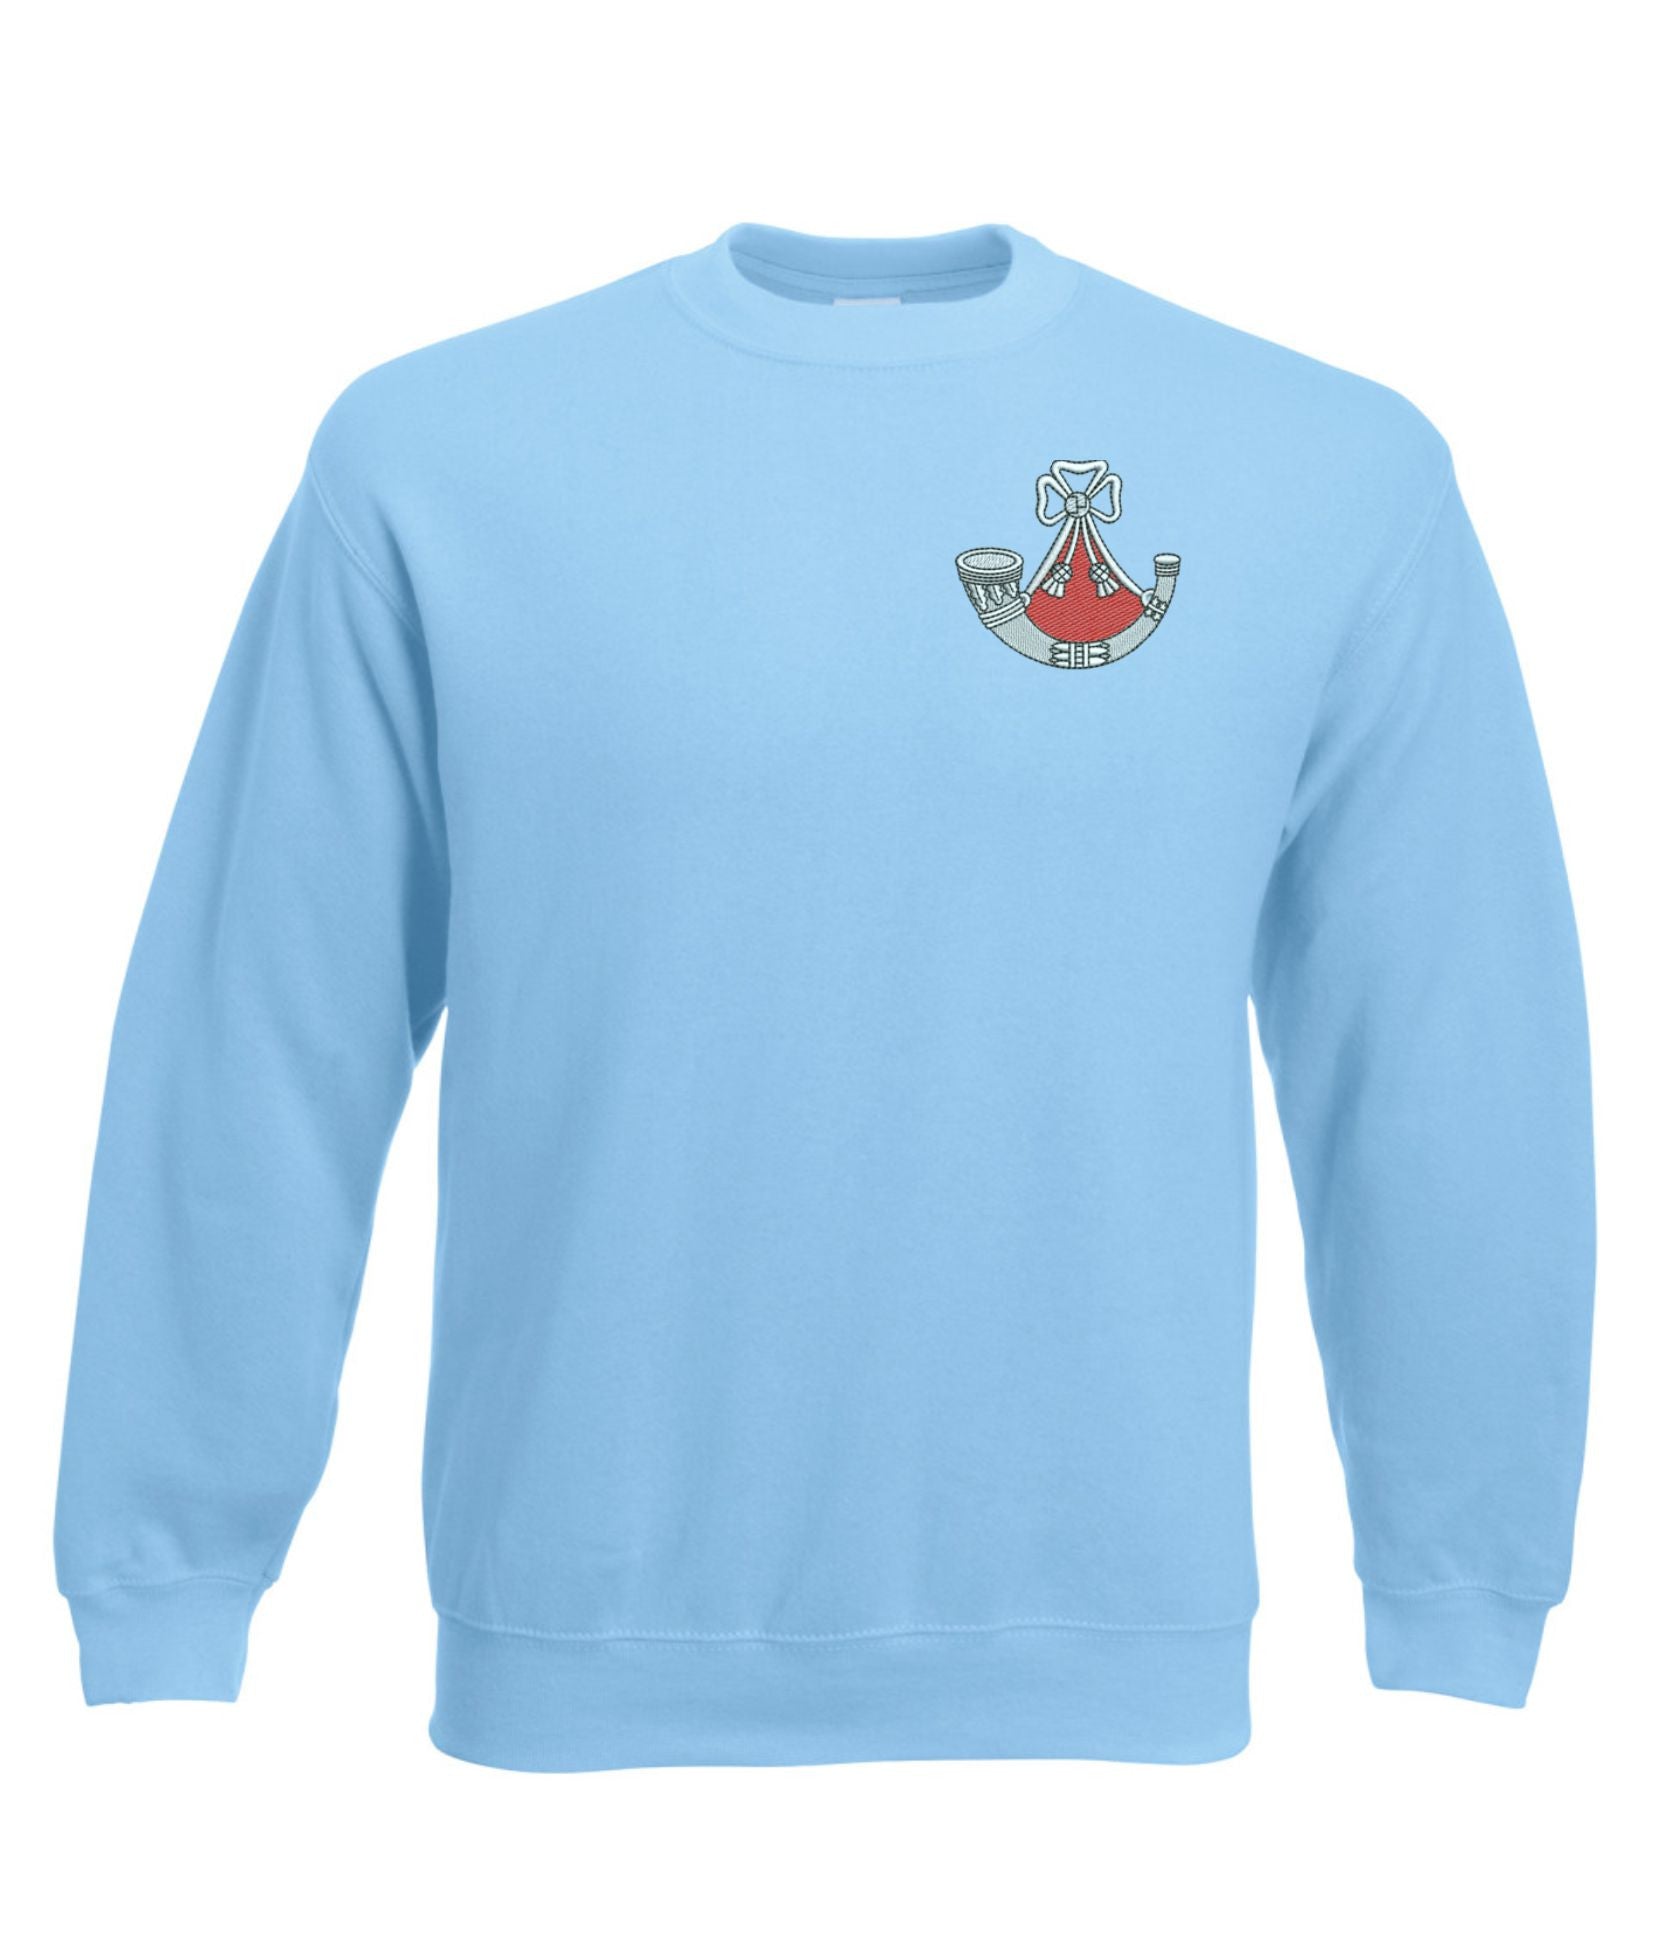 Light Infantry Regiment Sweatshirt